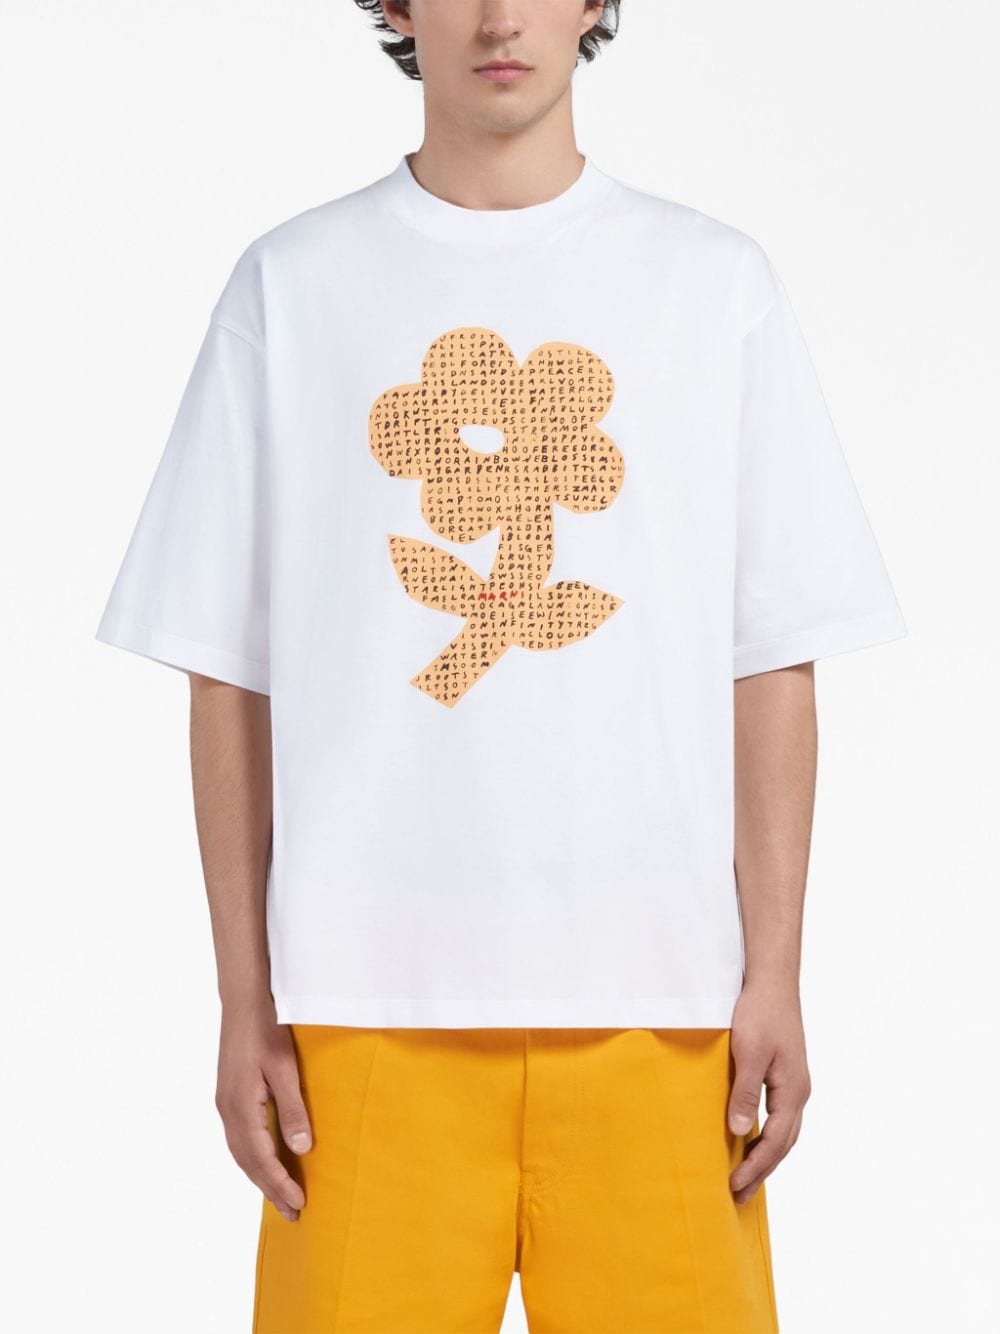 T-shirt in cotone con stampa floreale<br><br><br>